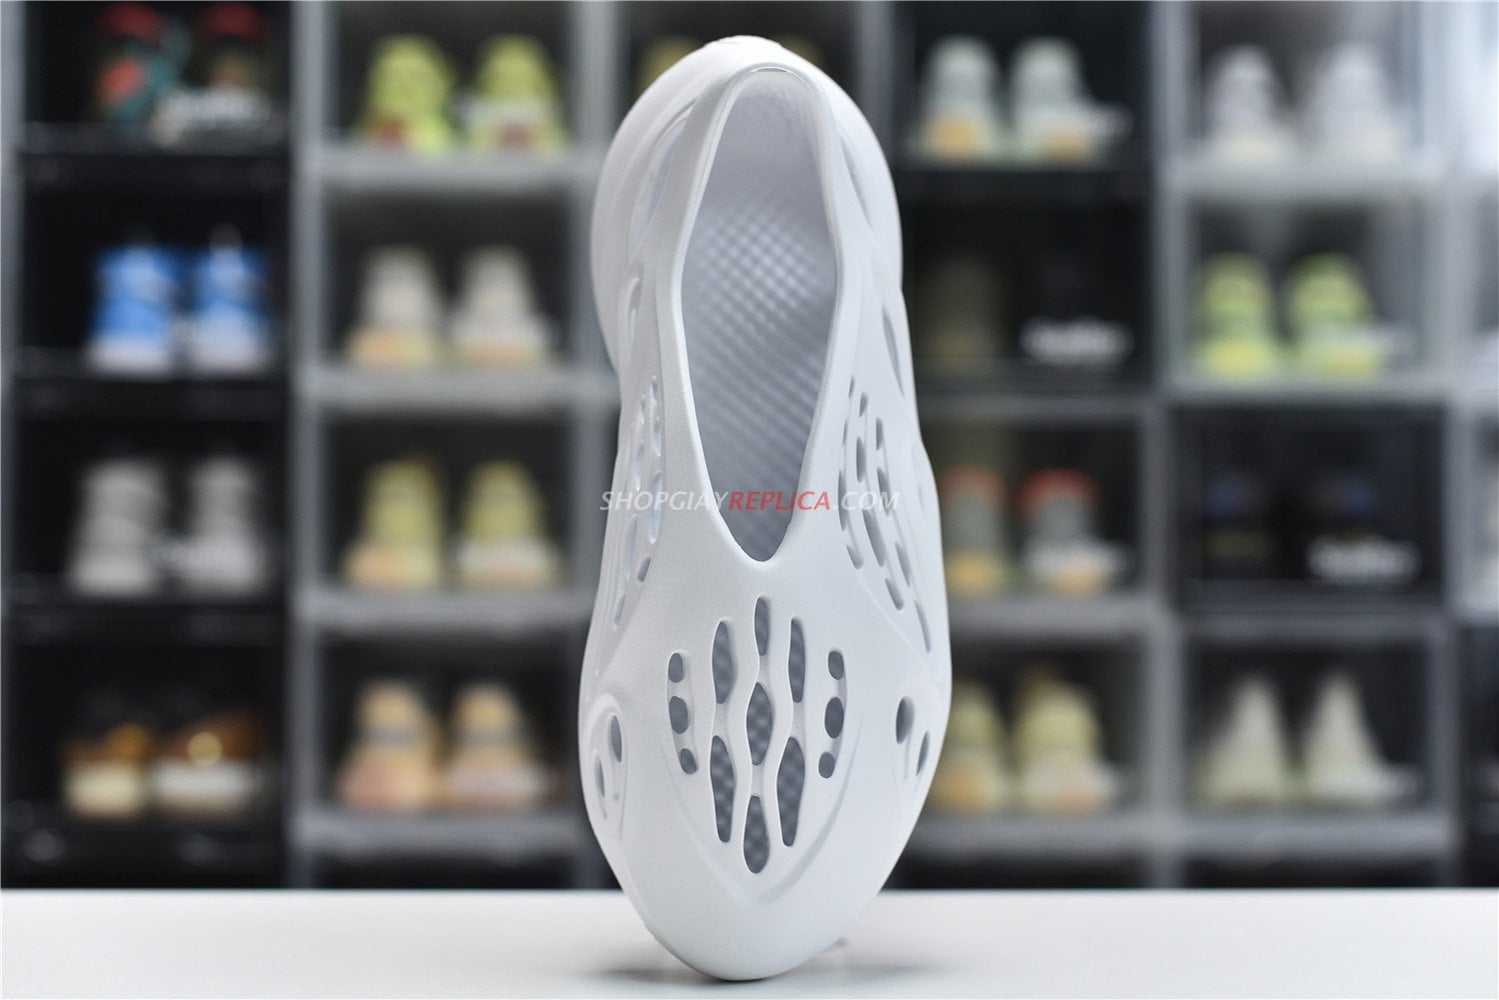 Giày Adidas Yeezy Foam Runner ‘Ararat’